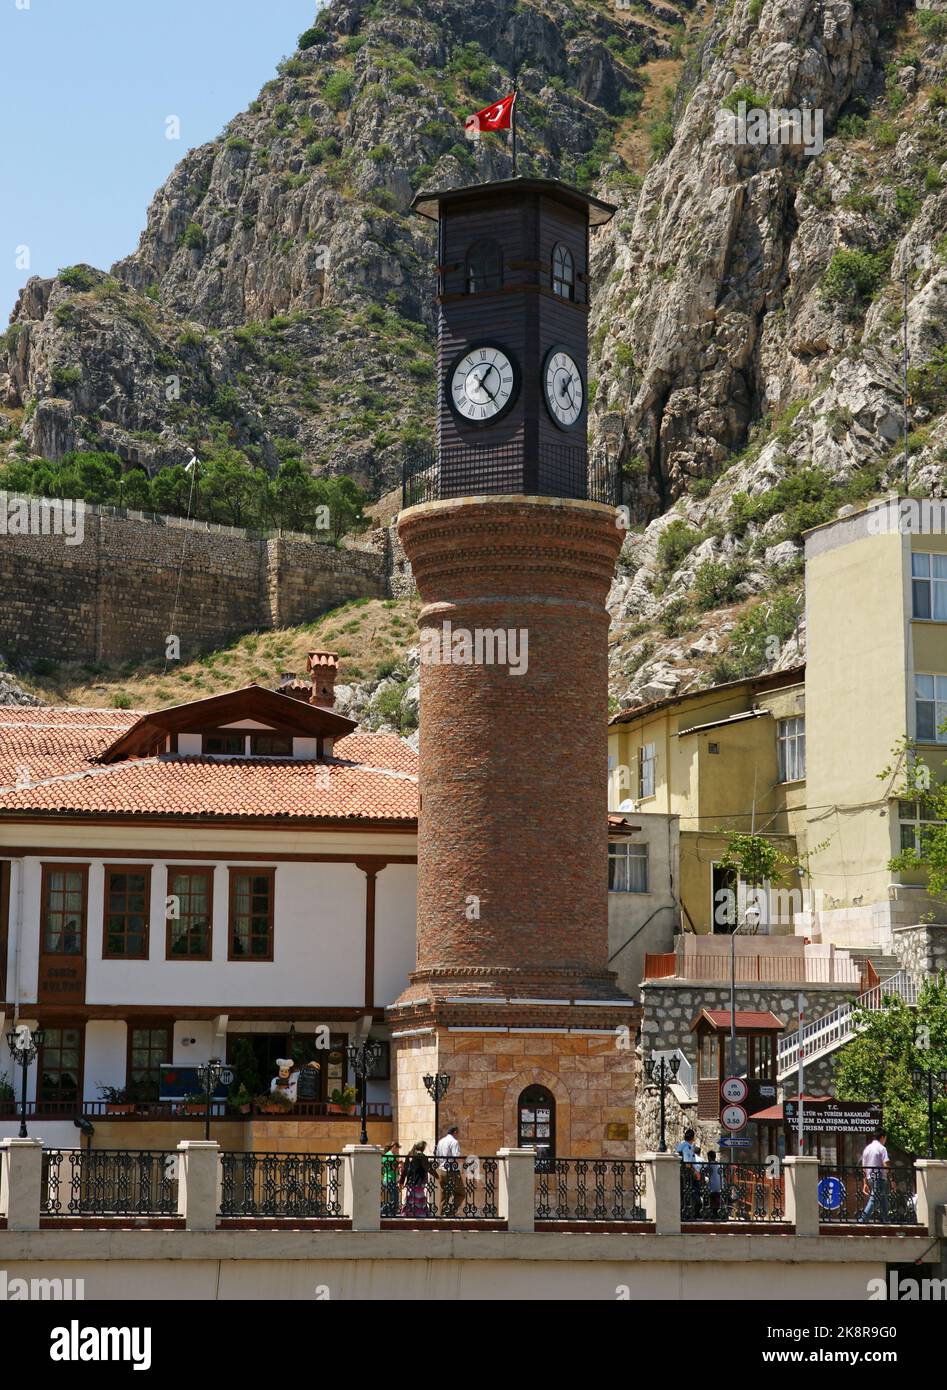 Located in Amasya, Turkey, Amasya Clock Tower was built in 1865. Stock Photo